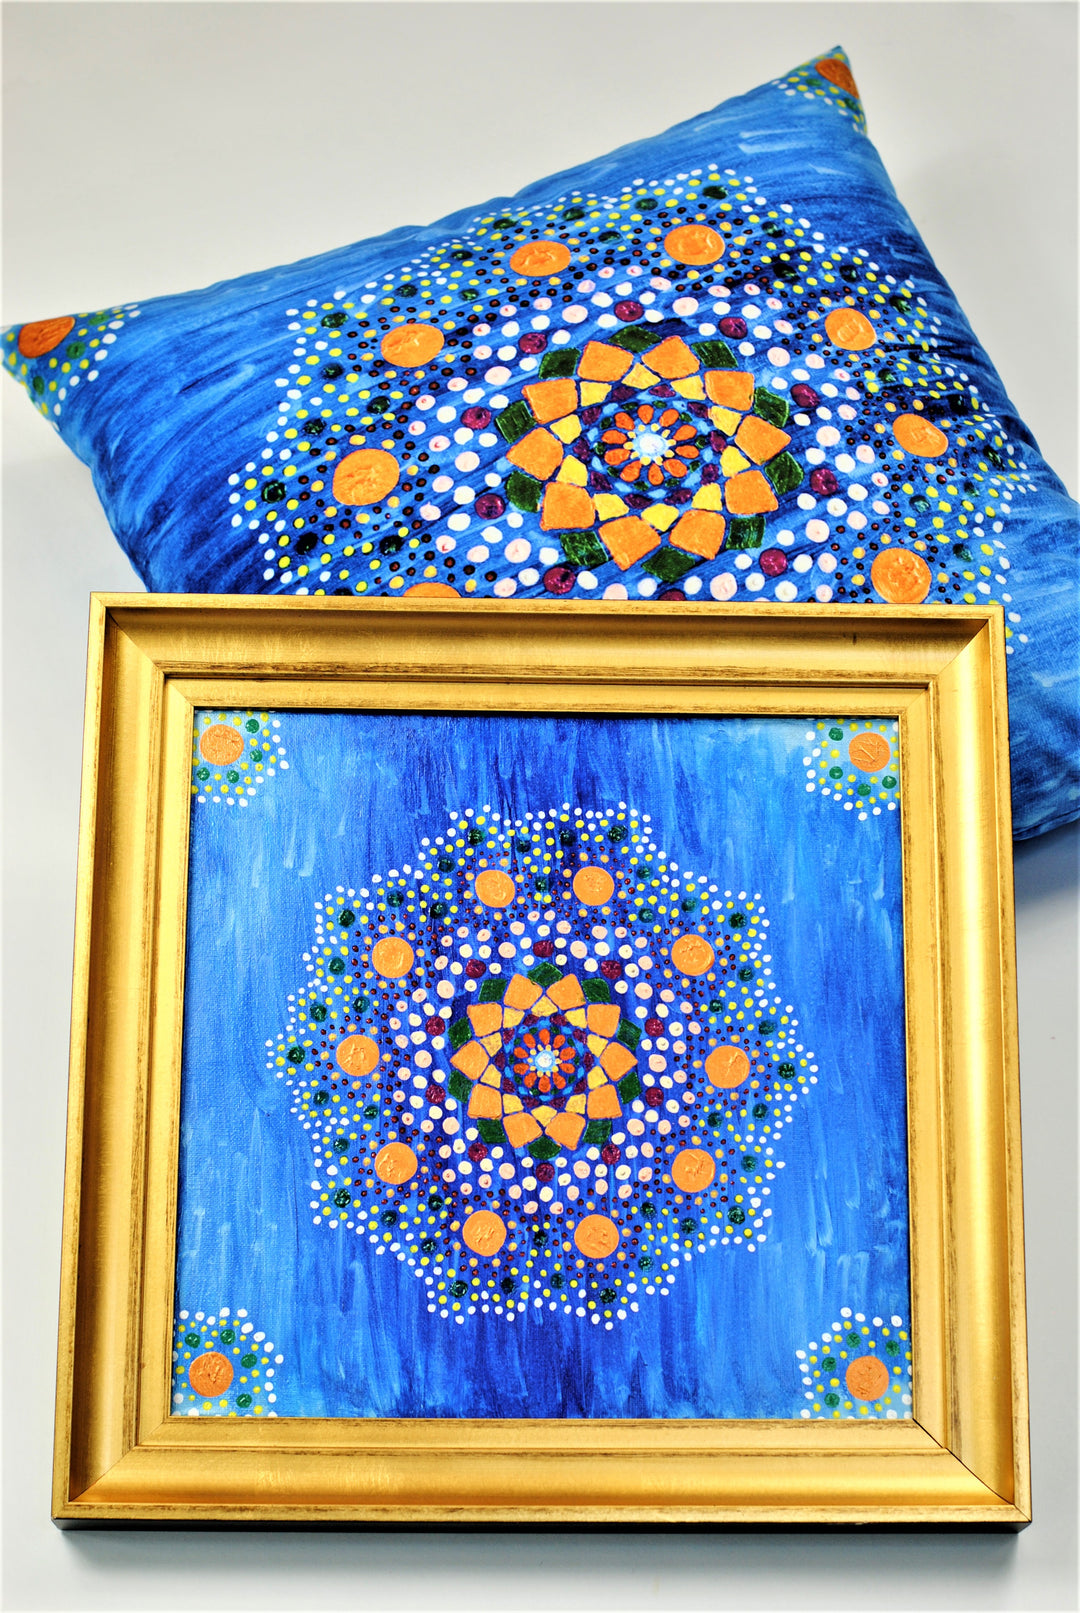 Yana MANDALA DREAM Dot Art Decorative Throw Pillow In Blue Orange Alesia Chaika Home Collection